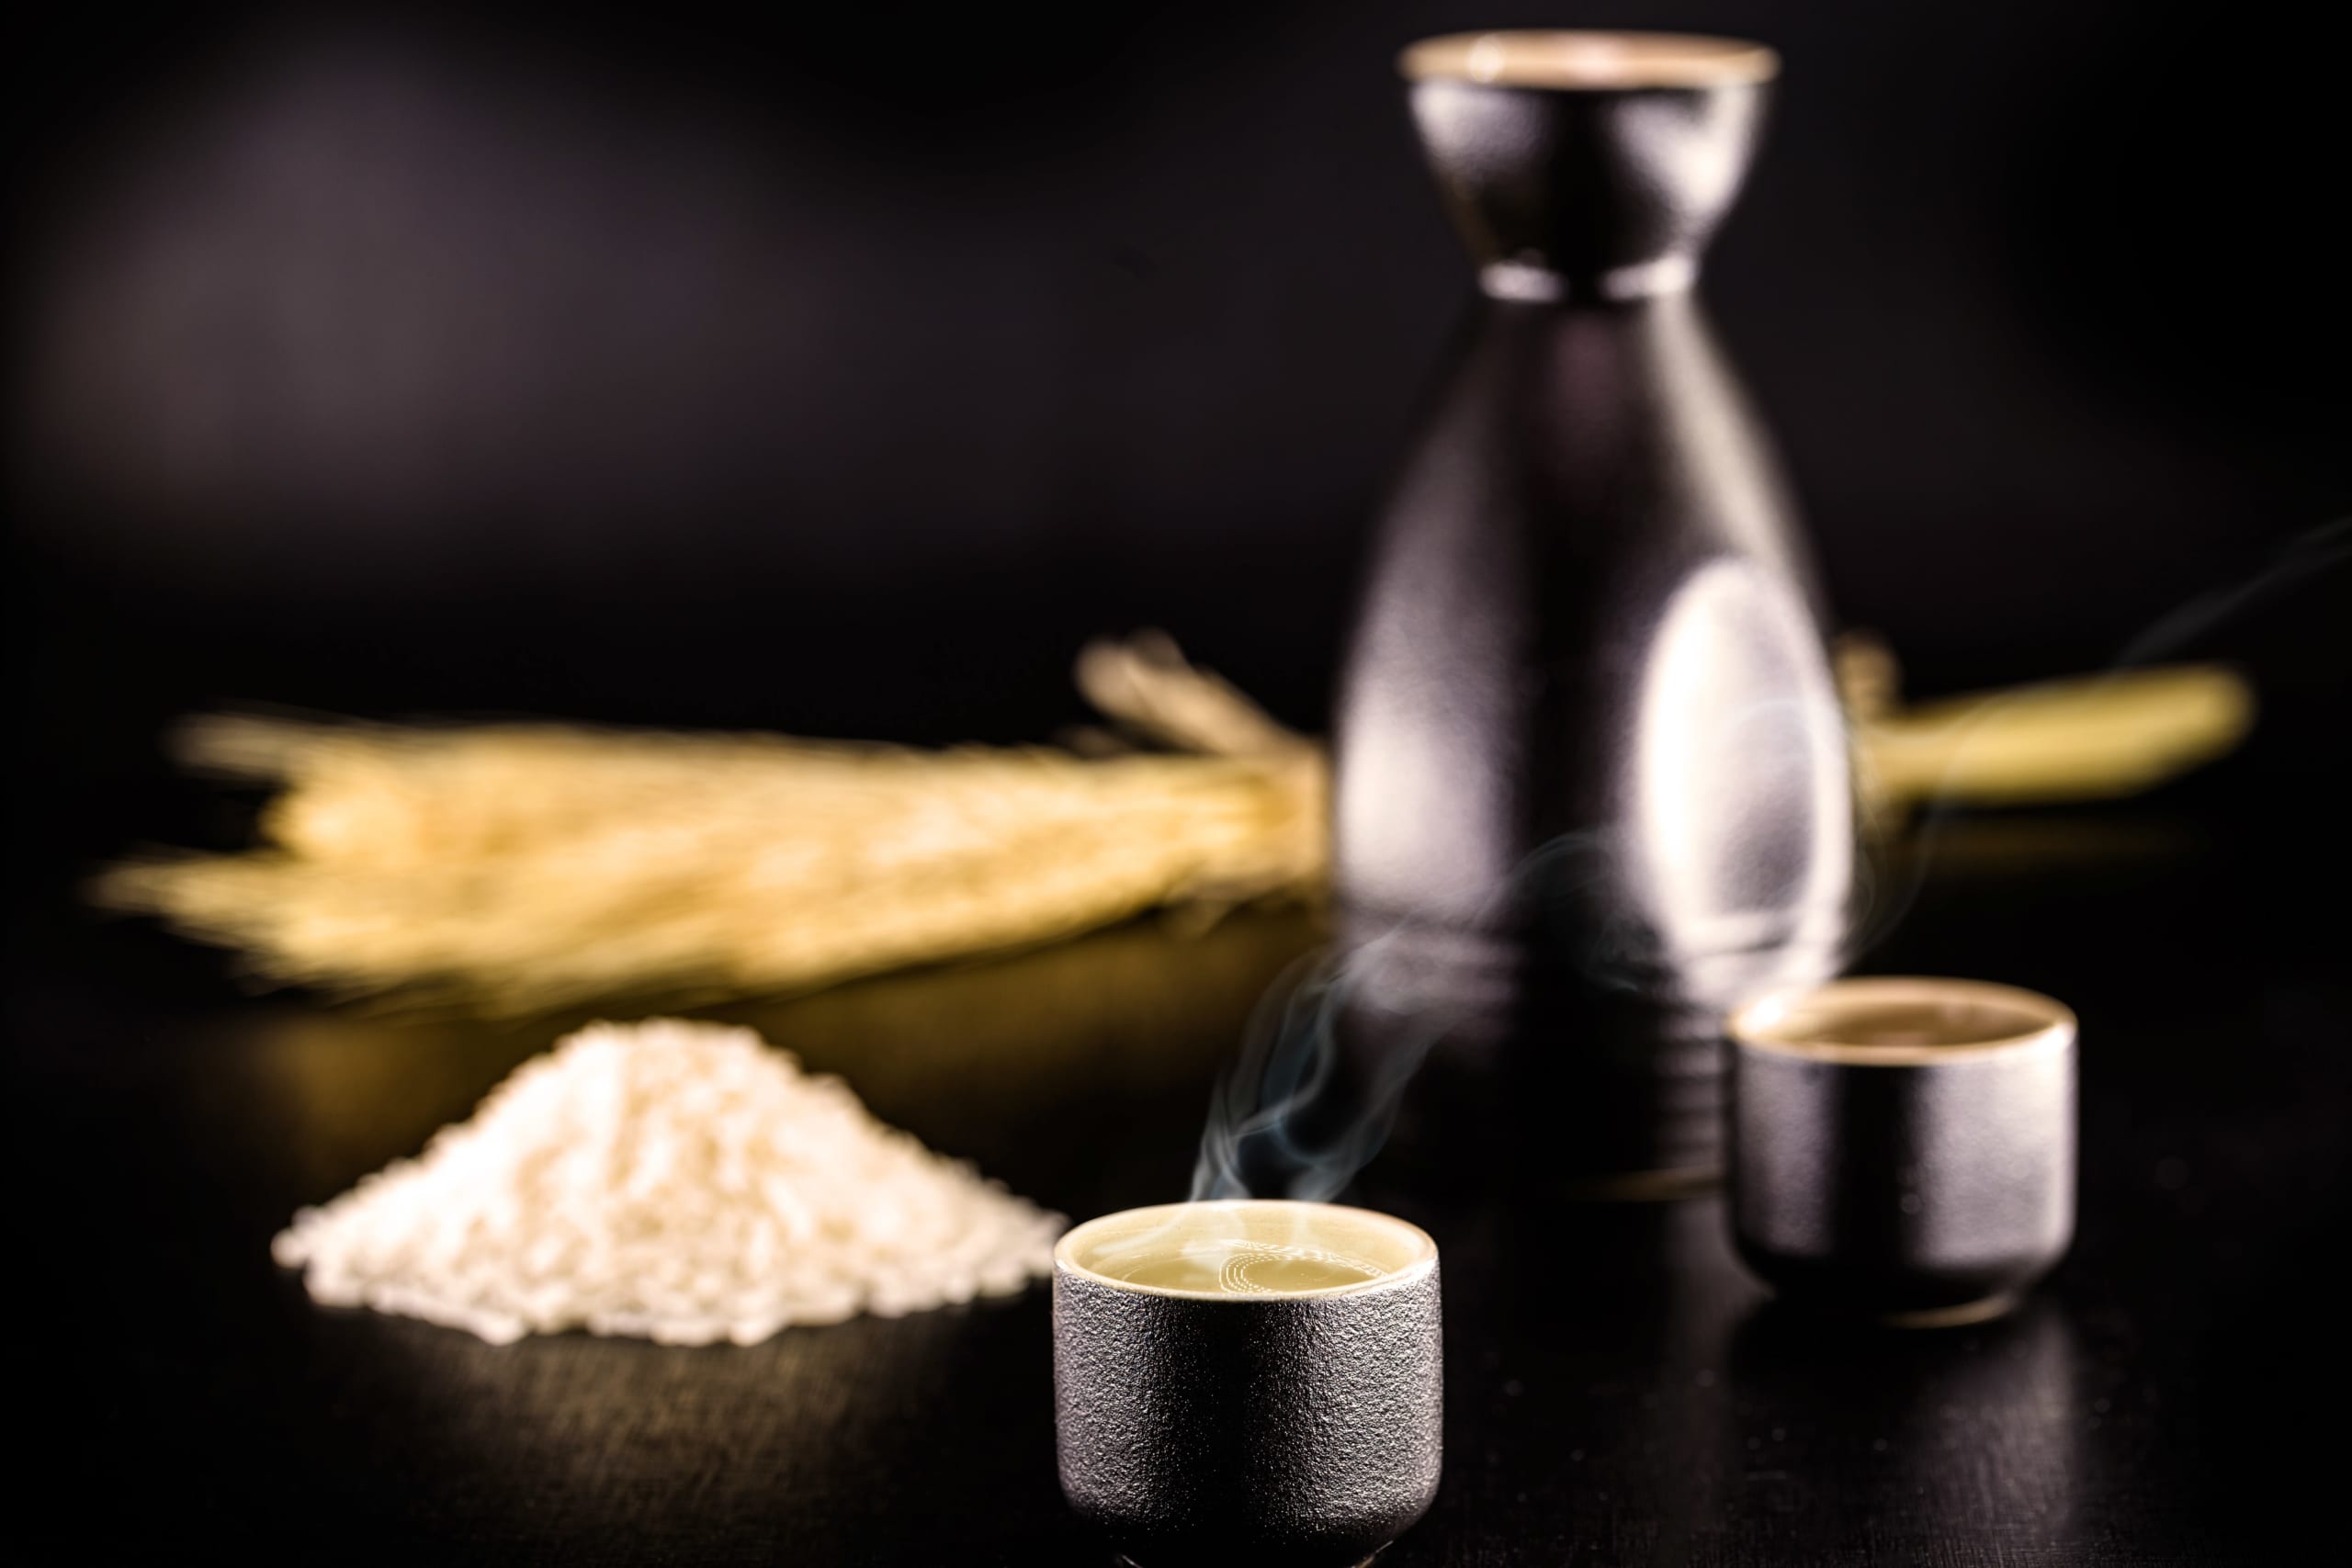 sake cup and rice grains